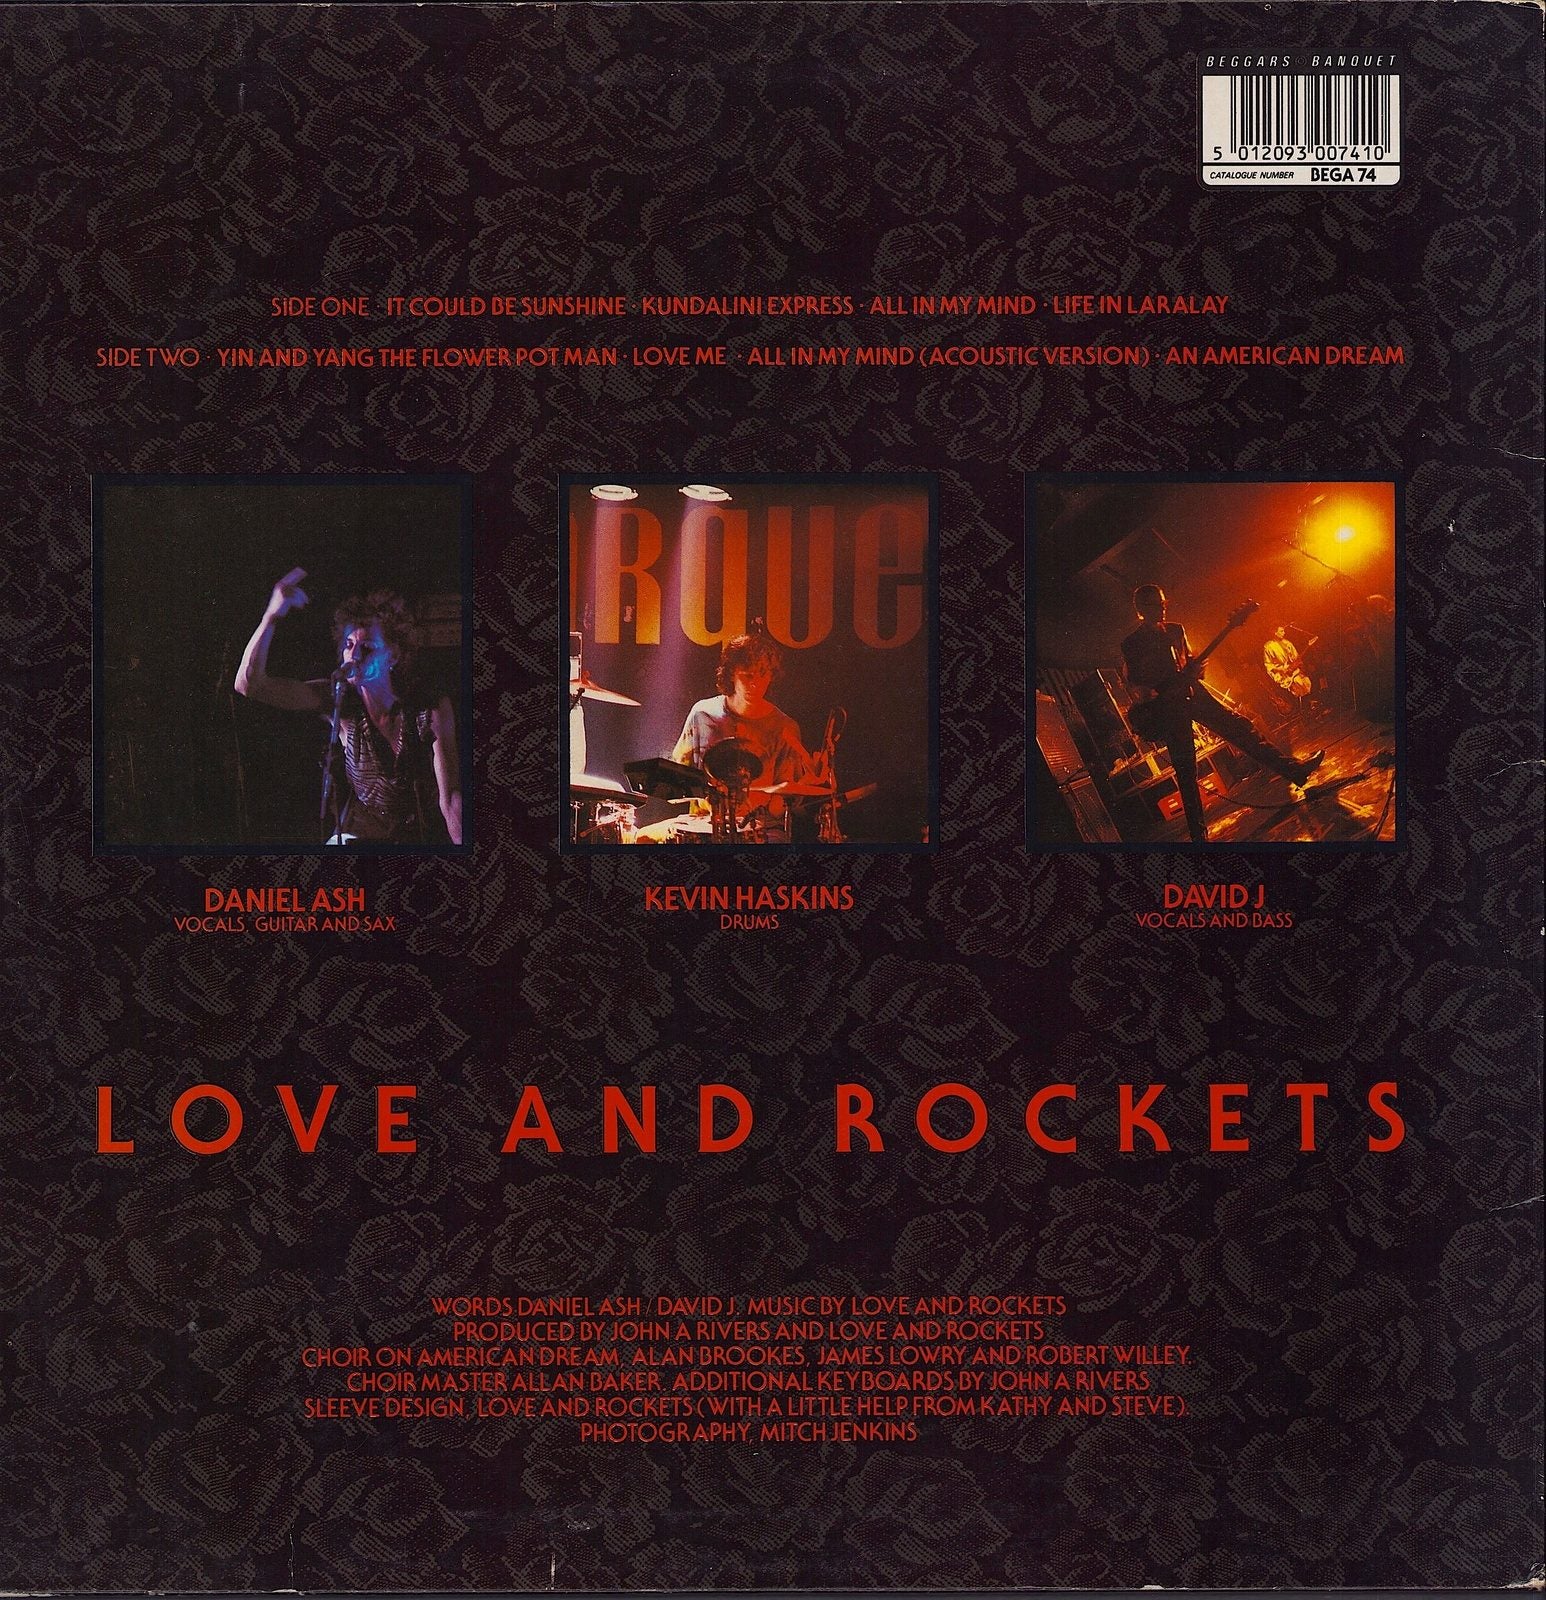 Love And Rockets ‎- Express Vinyl LP